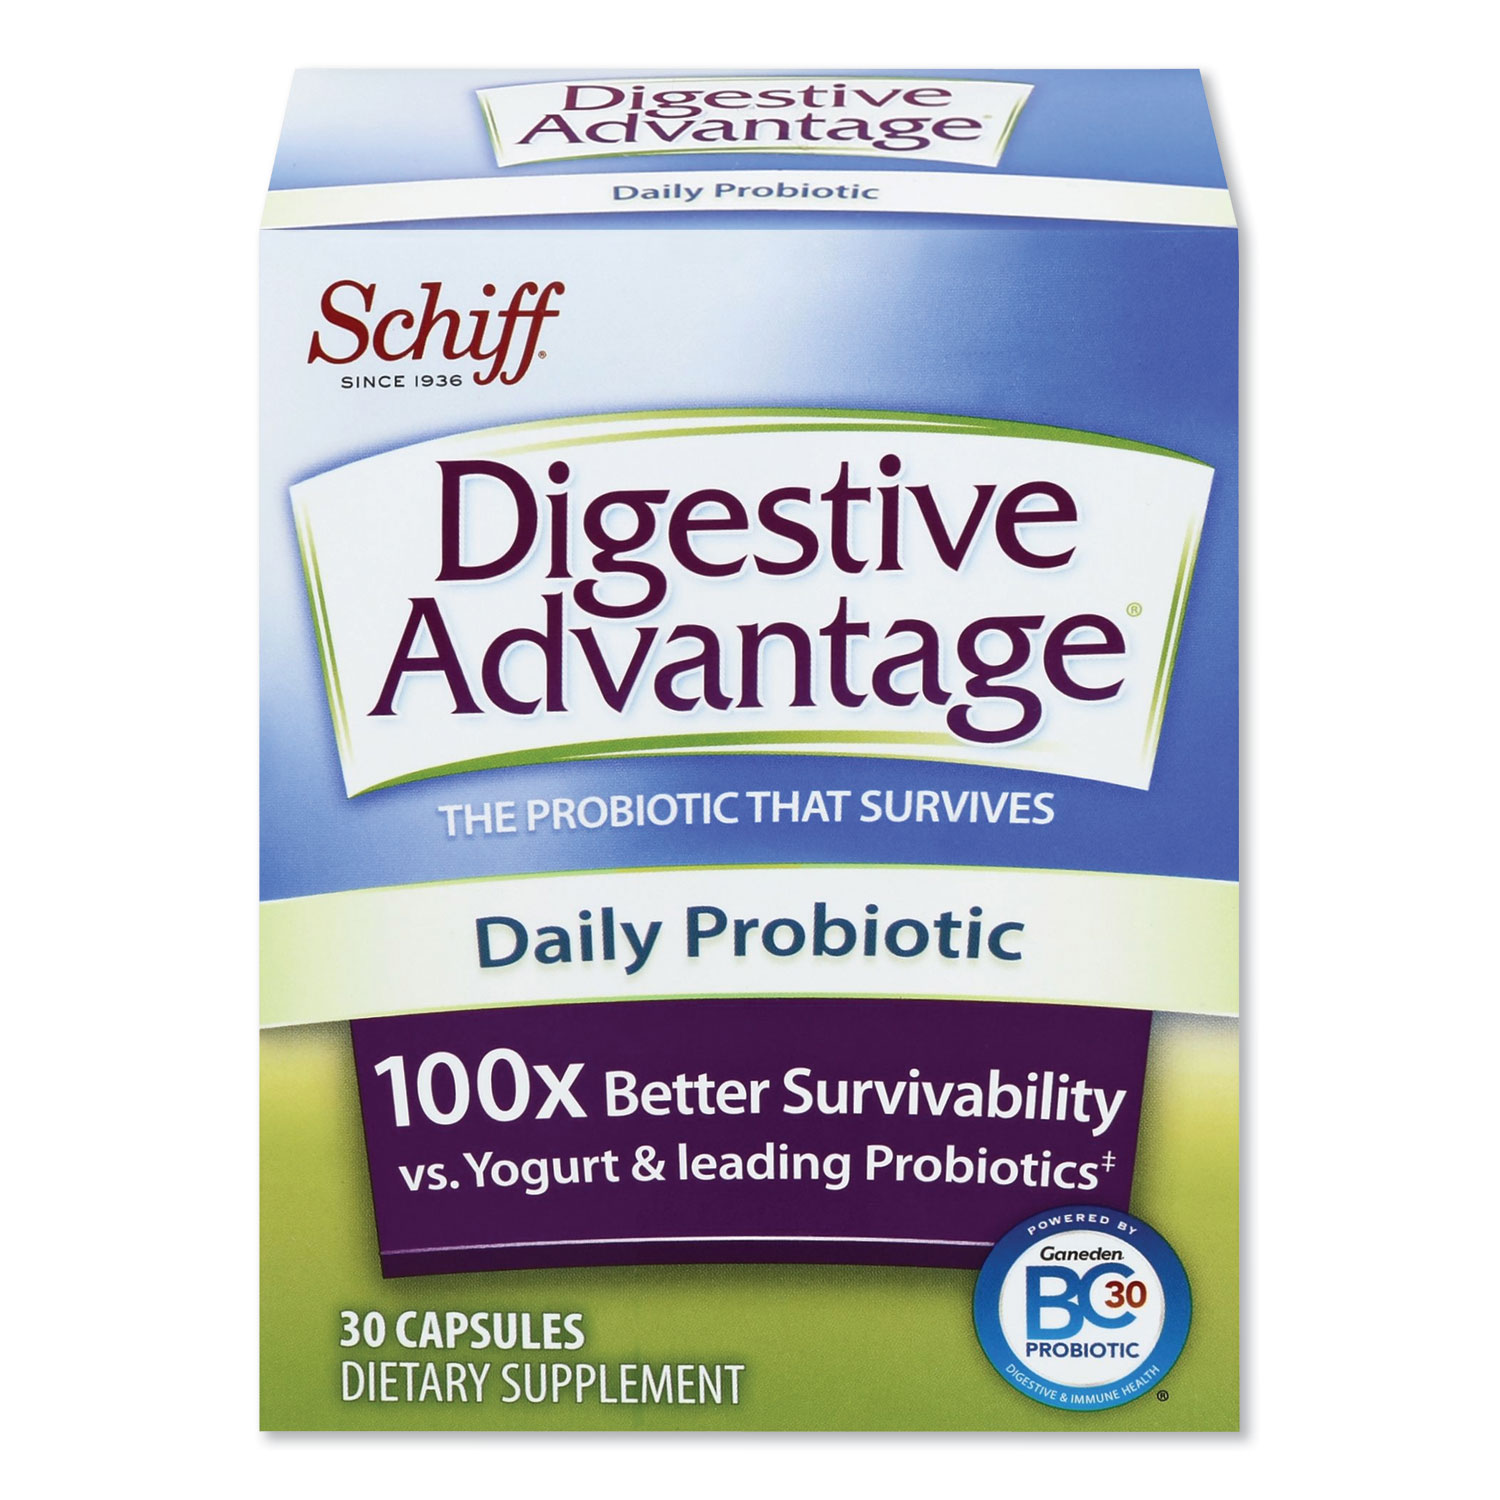 Daily Probiotic Capsule, 30 Count